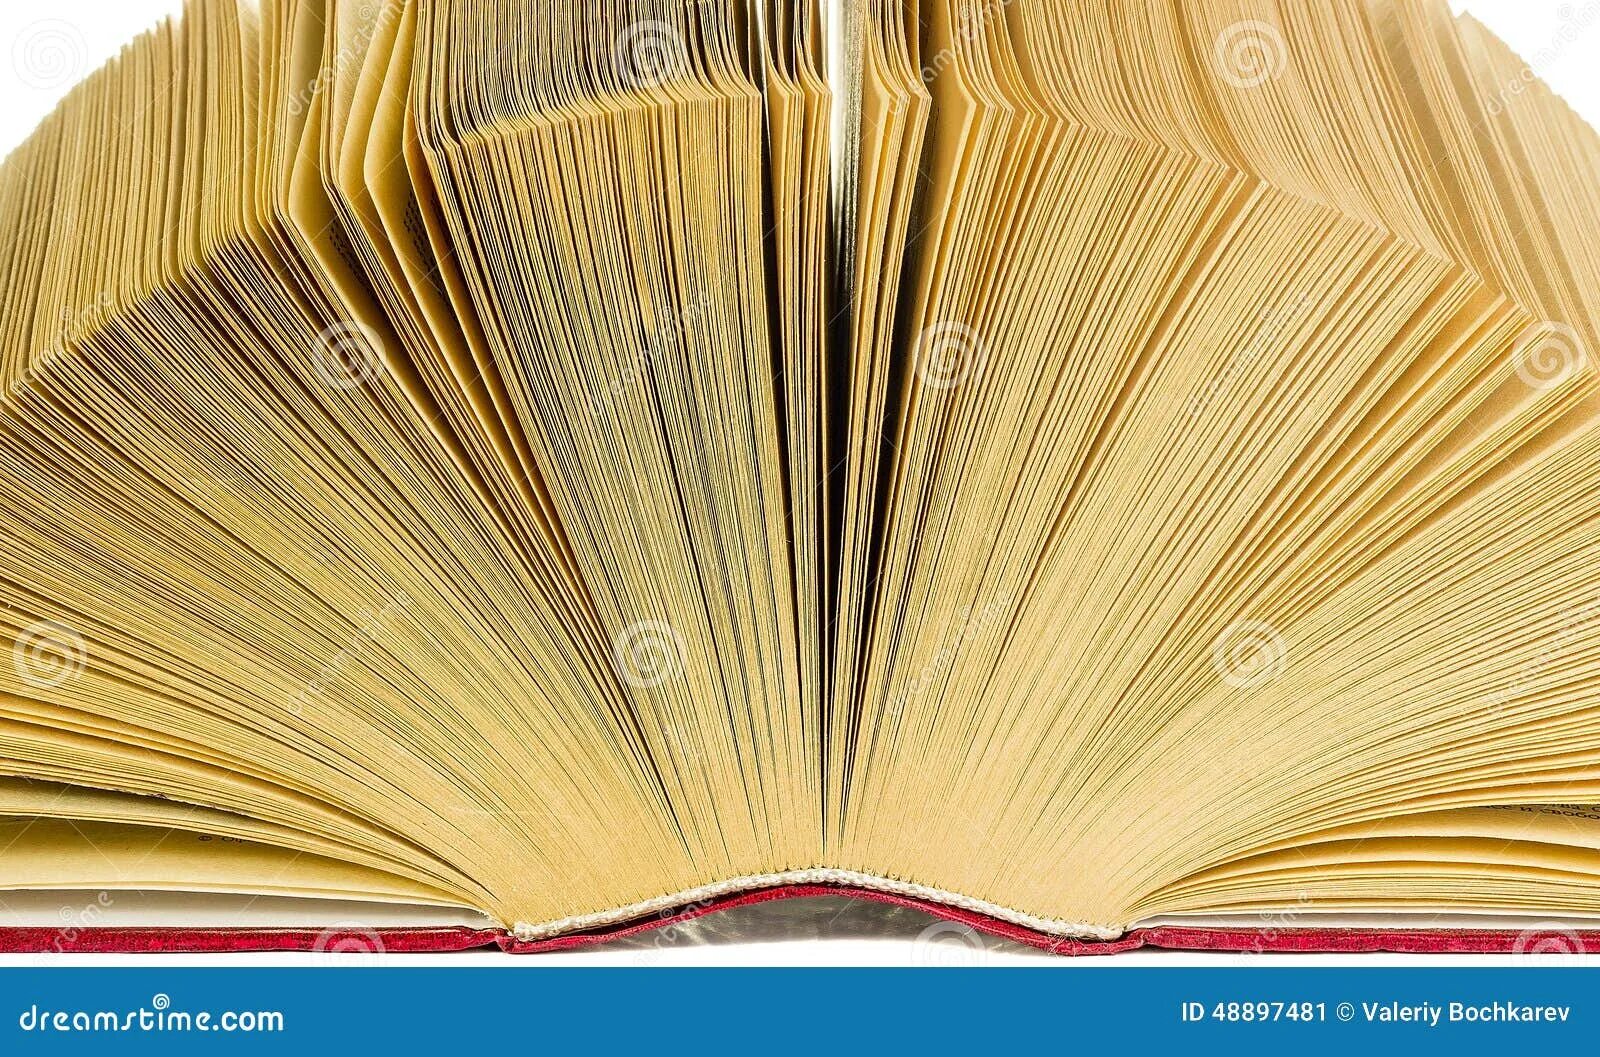 Толстая старая книга. Открытая книга на прозрачном фоне. Открытая толстая книга. Раскрытая книга Толстого. Толстая книга на прозрачном фоне.